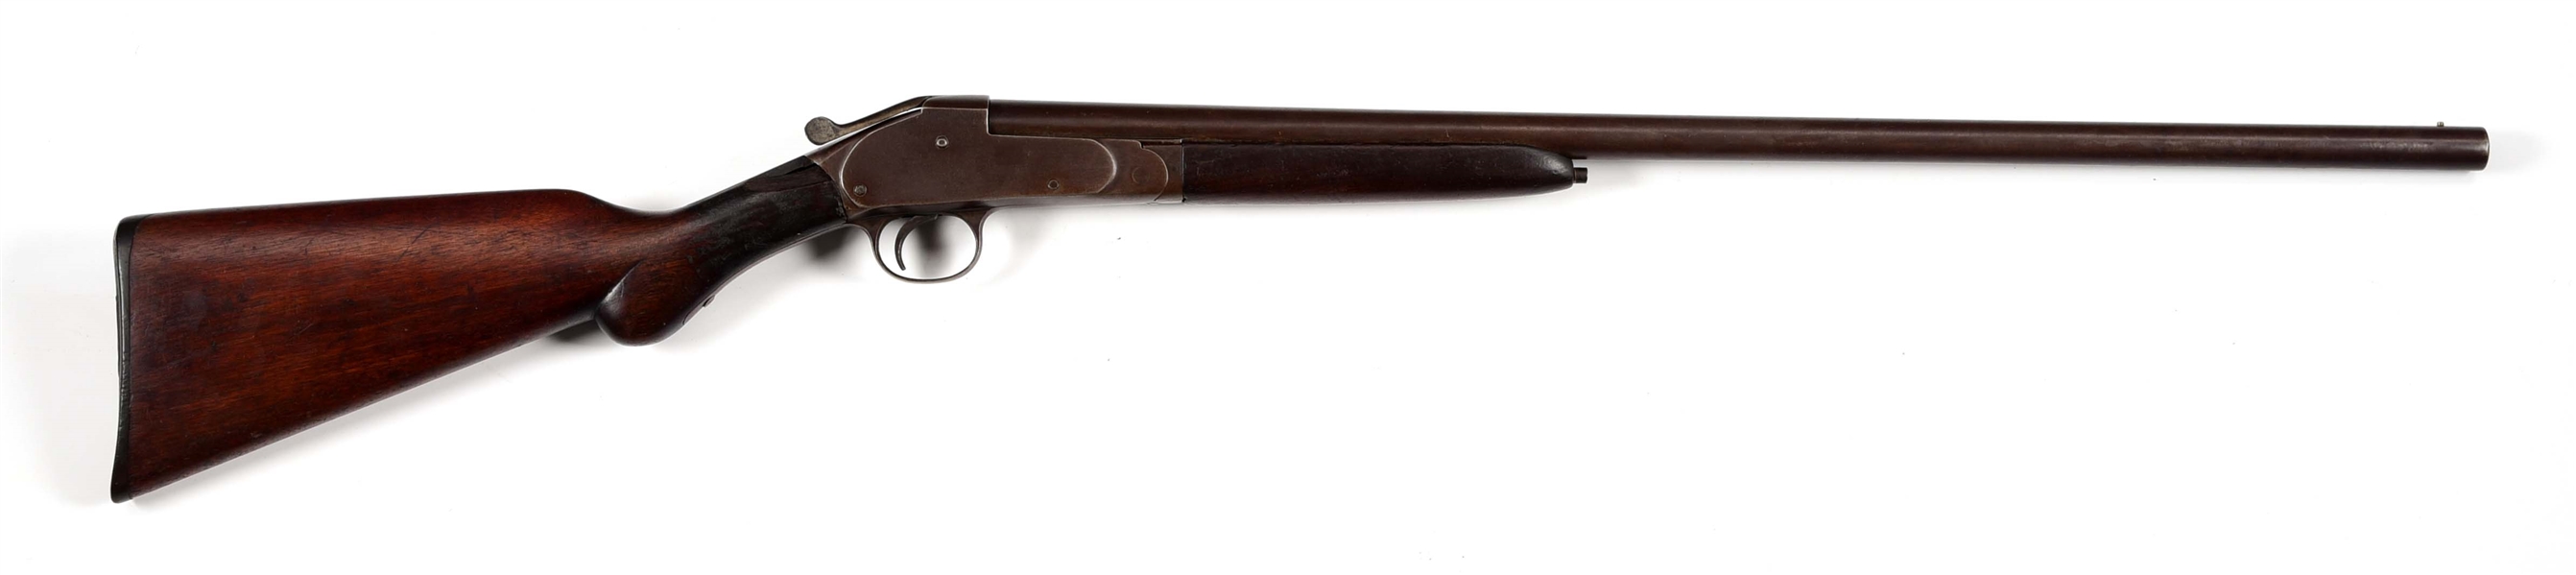 (C) REMINGTON MODEL 1893 NO. 3 SINGLE SHOT SHOTGUN.